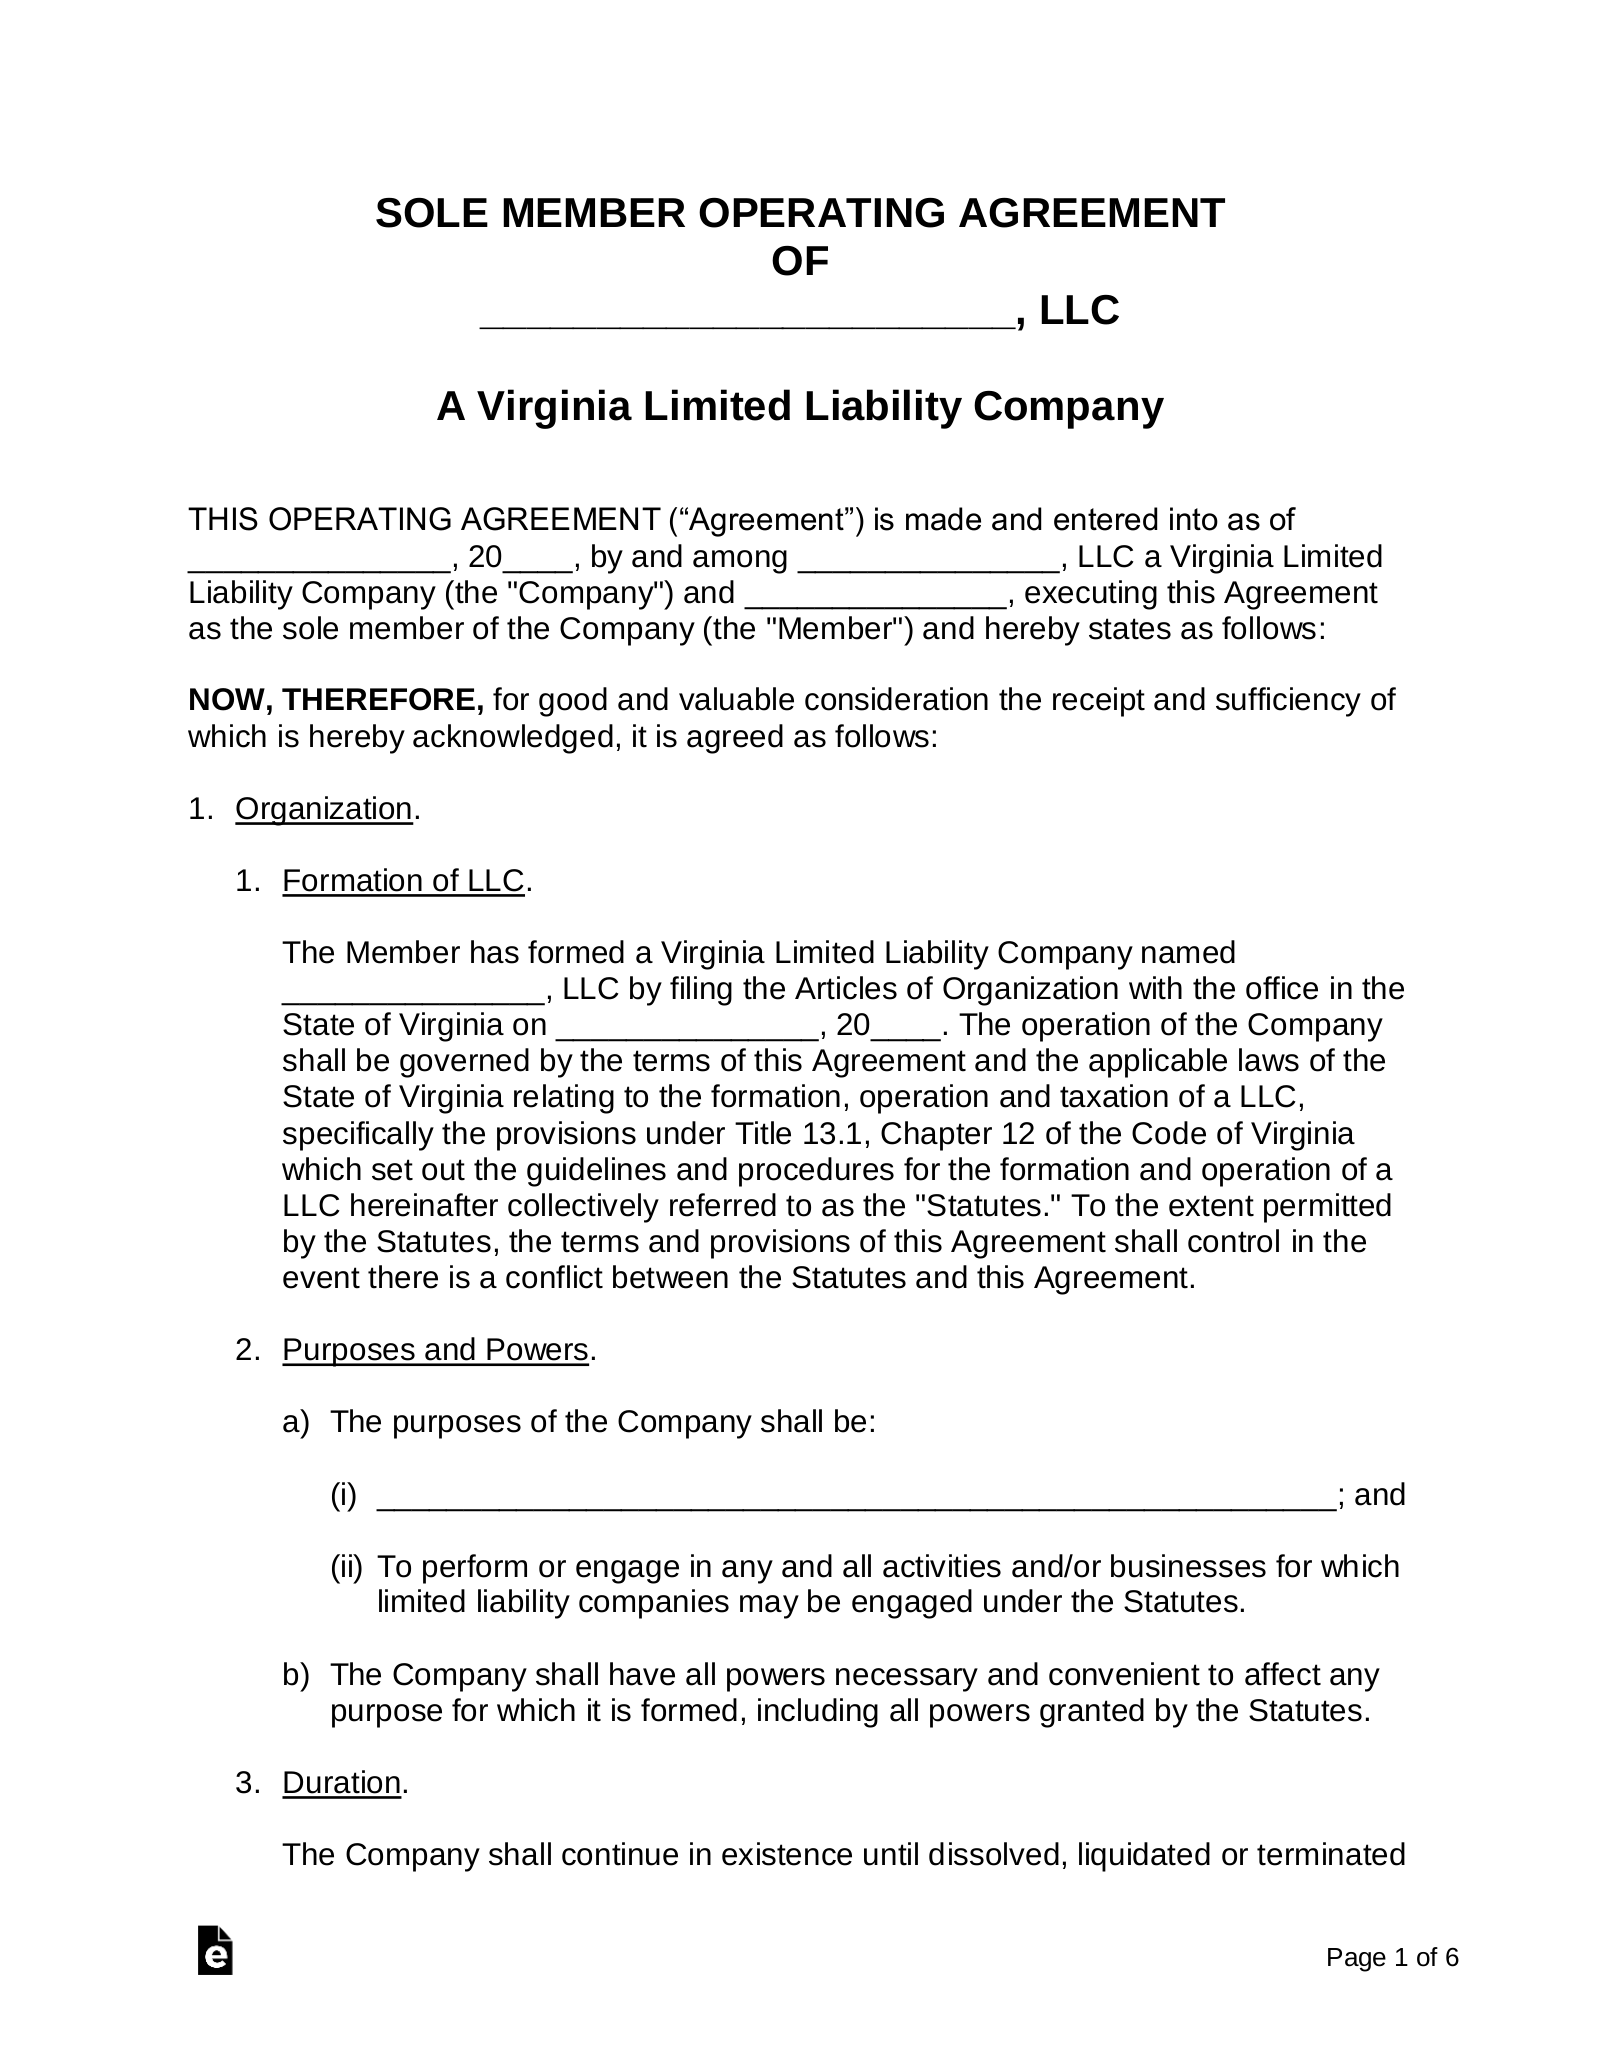 free-virginia-single-member-llc-operating-agreement-form-pdf-word